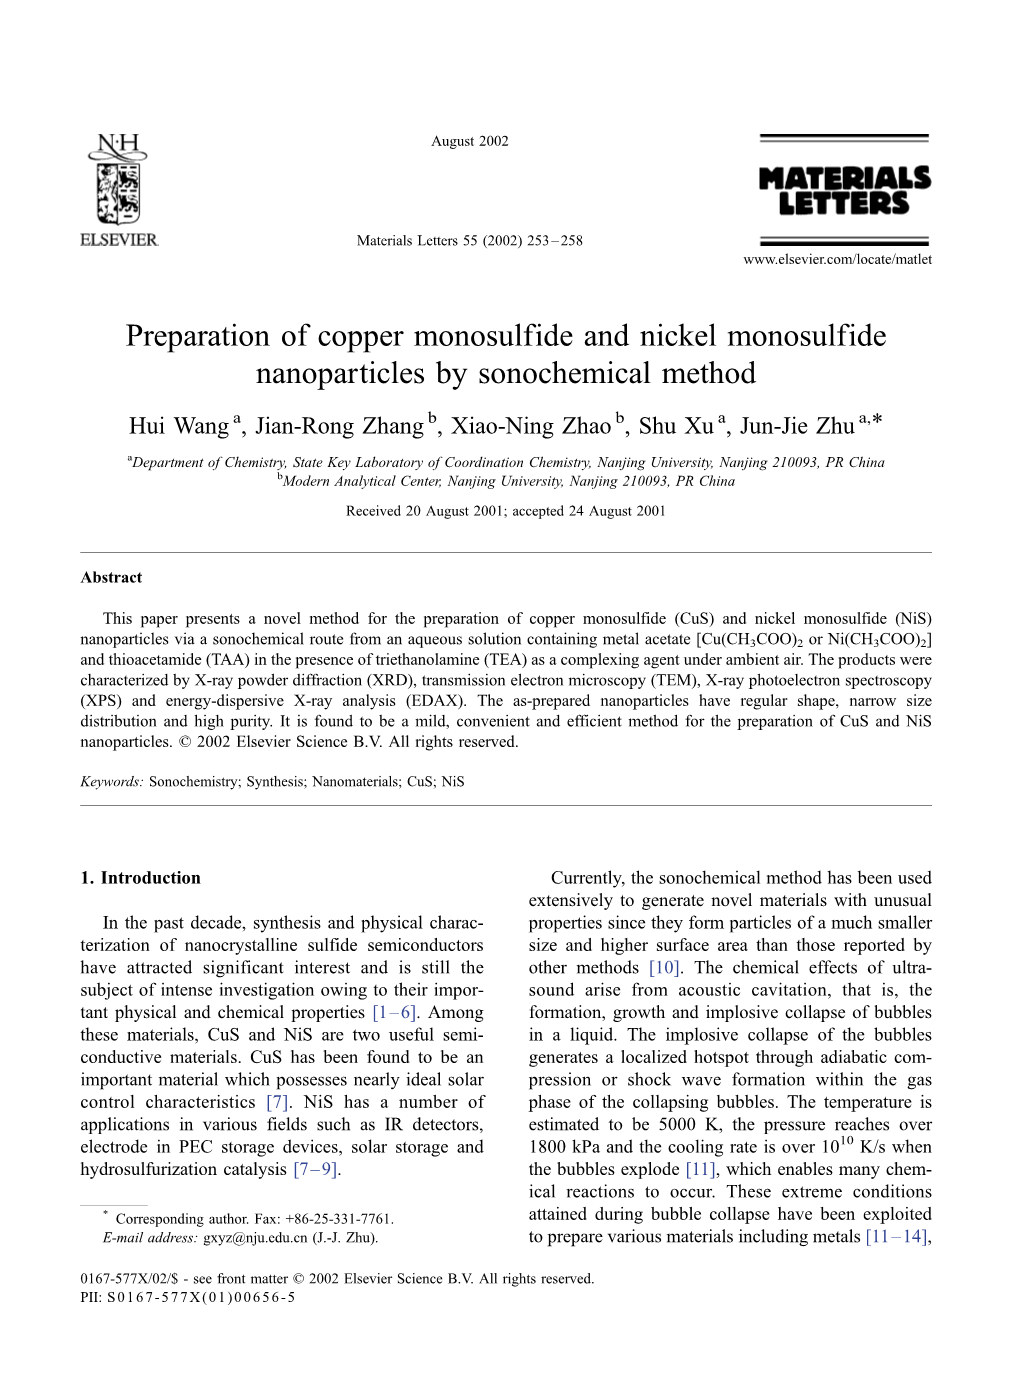 Preparation of Copper Monosulfide and Nickel Monosulfide Nanoparticles by Sonochemical Method